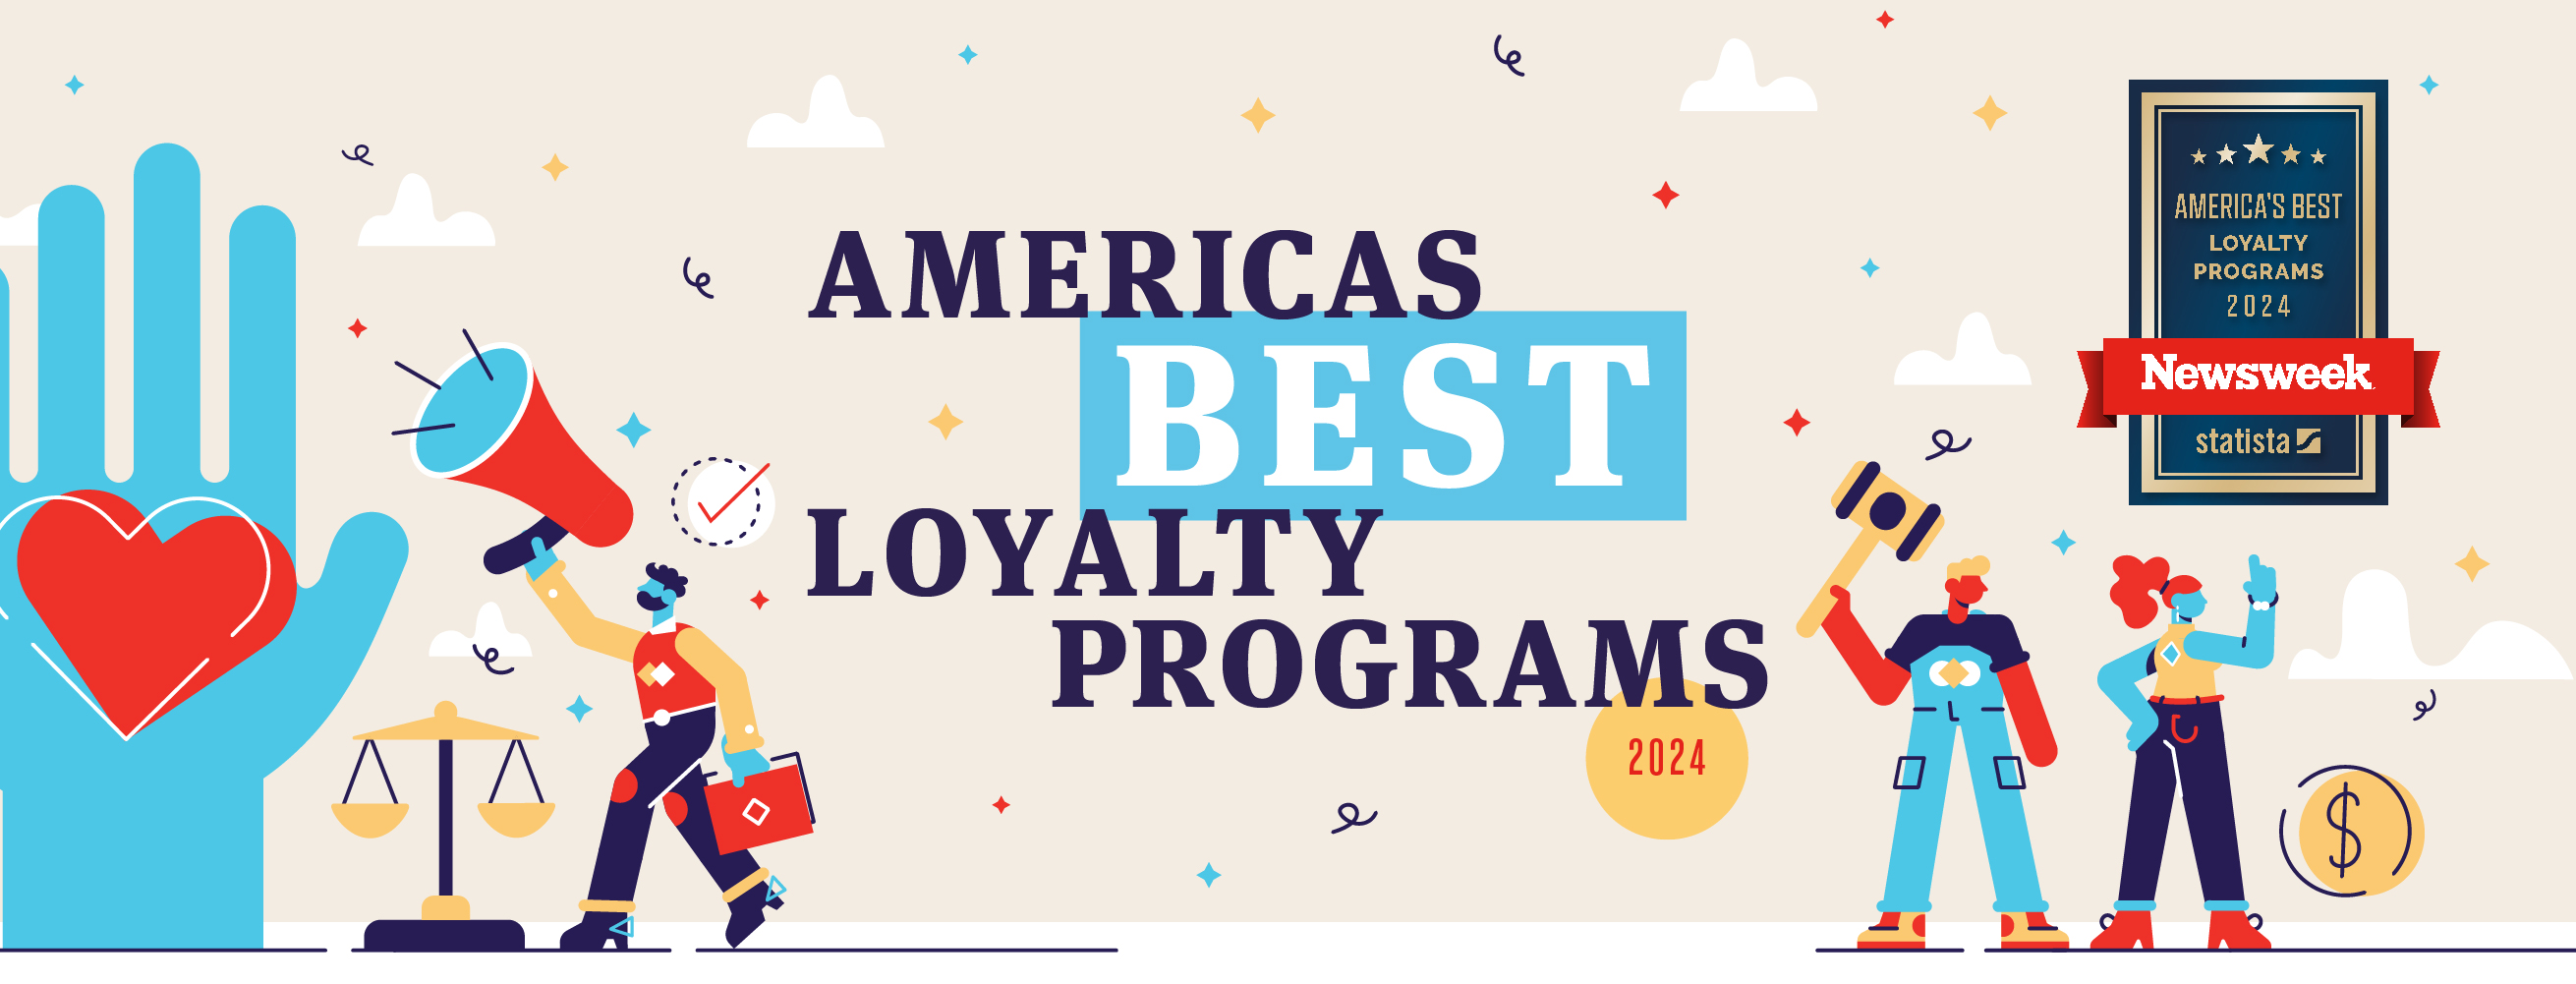 America's Best Loyalty Programs 2024 Newsweek Rankings